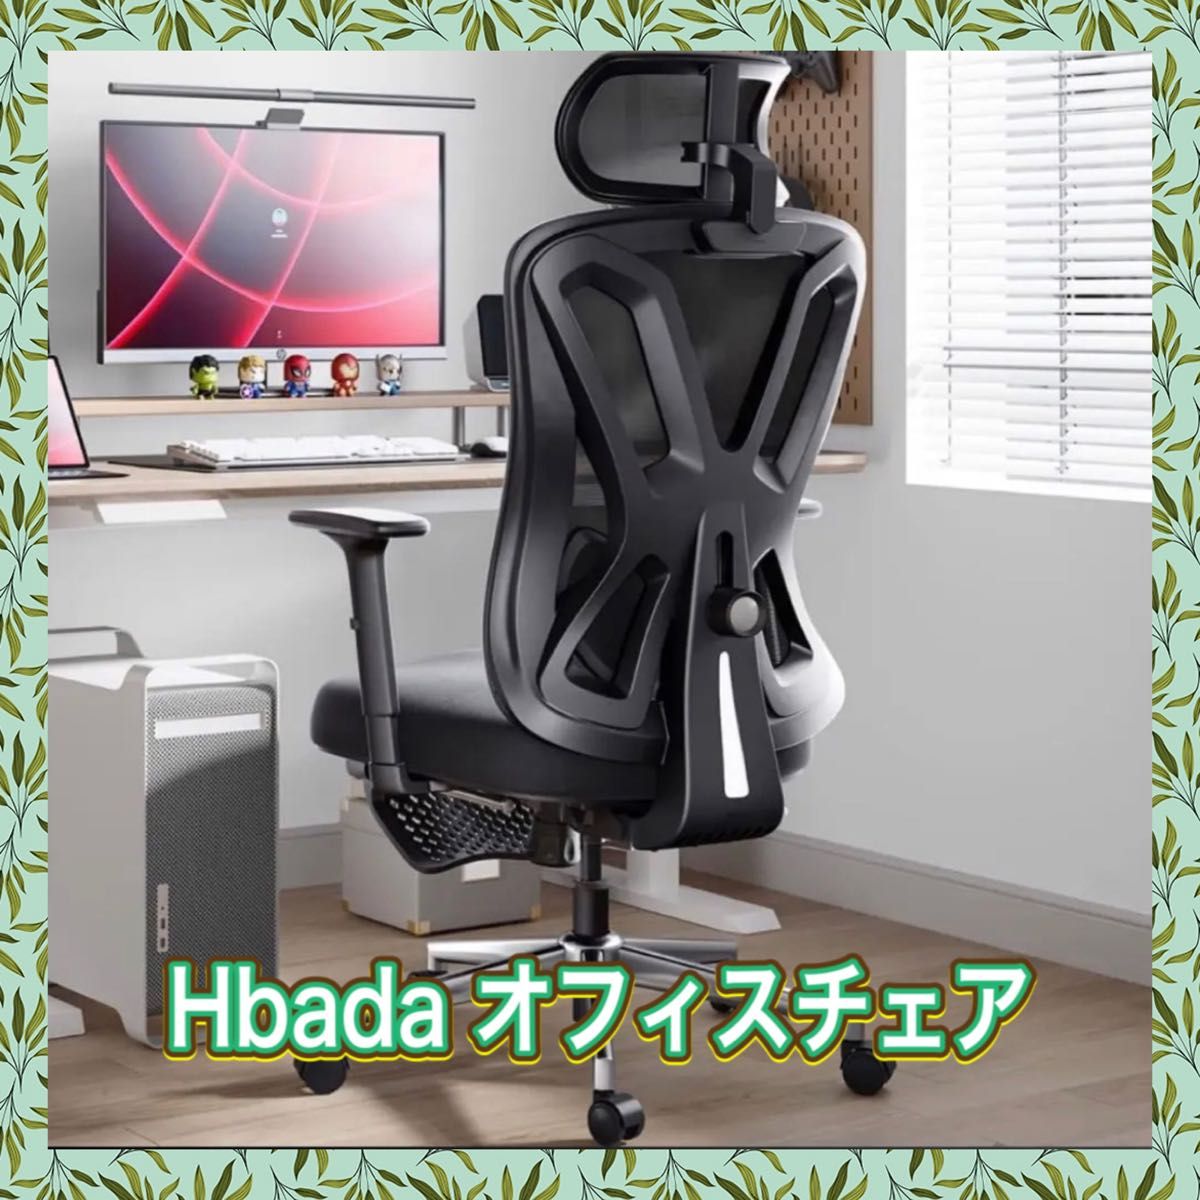 Hbada オフィスチェア デスクチェア 椅子 チェア 大面積ランバー